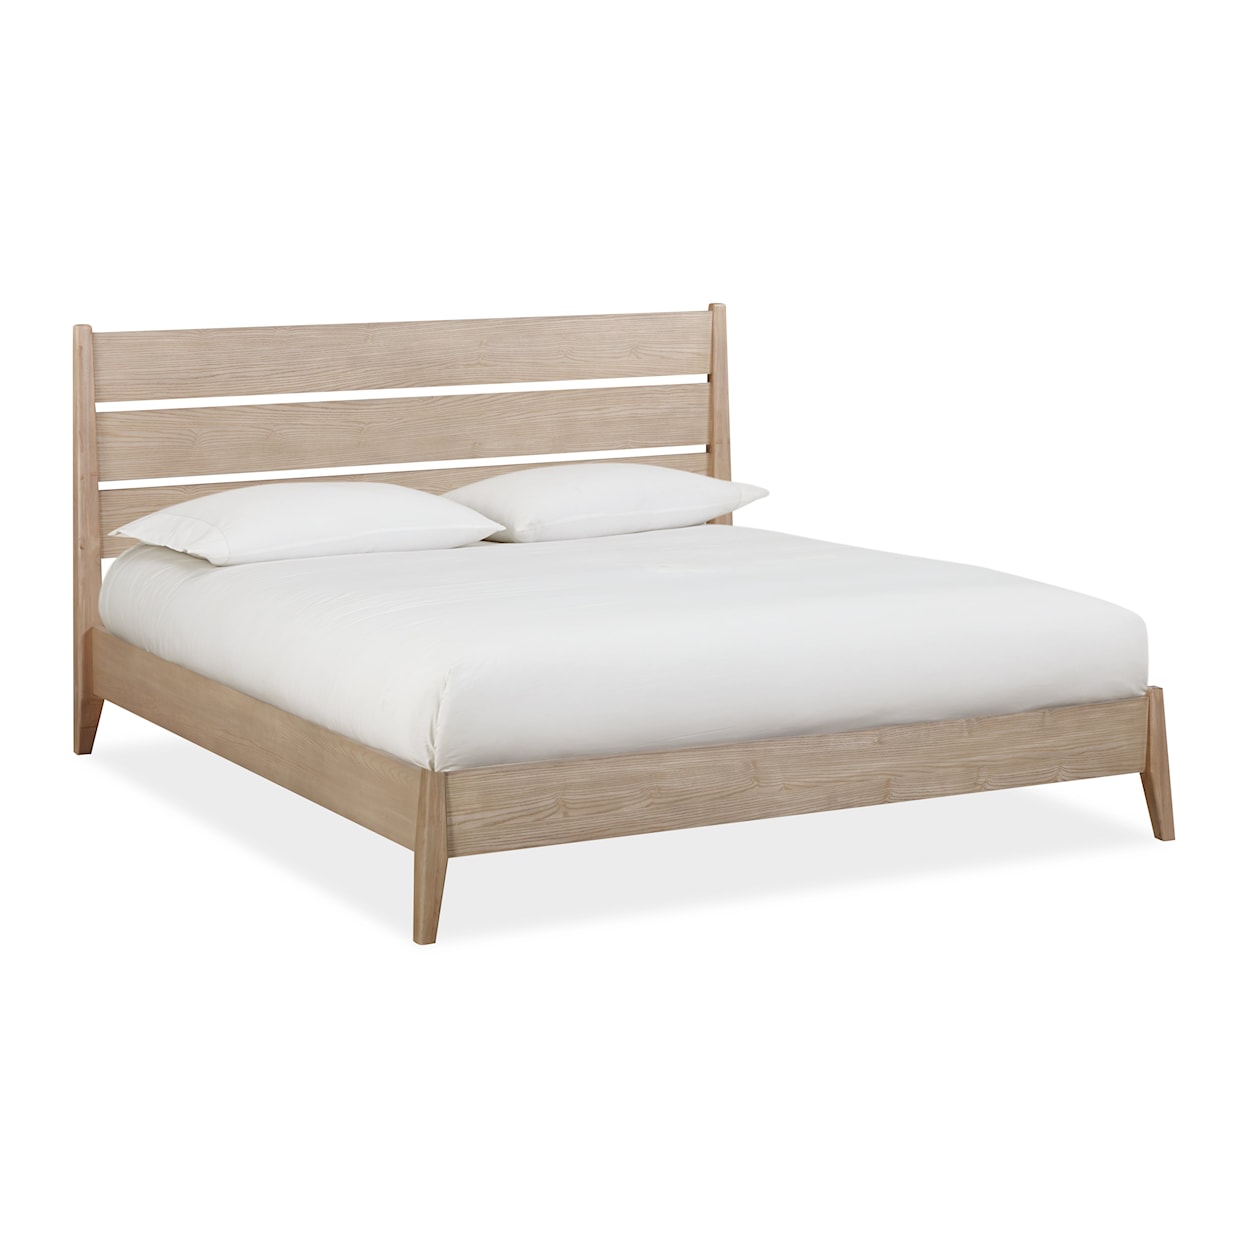 Modus International Sumire Full Wood Platform Bed